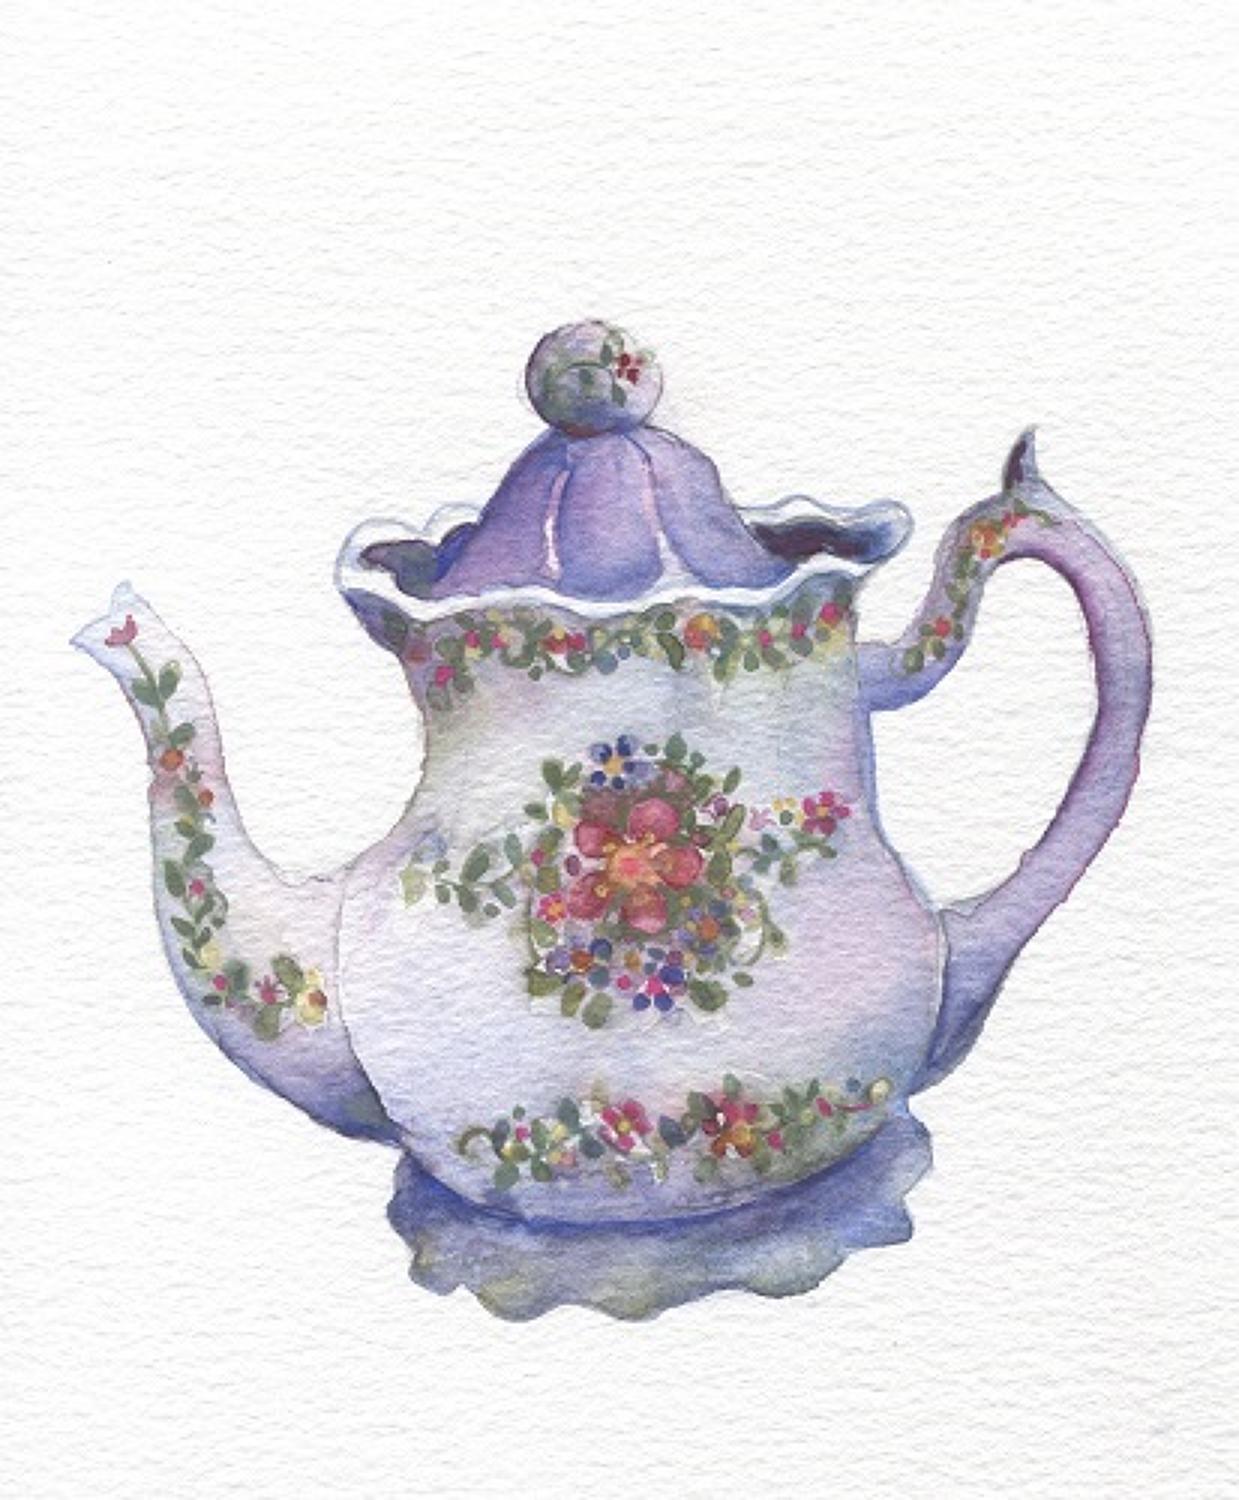 Granny's teapot